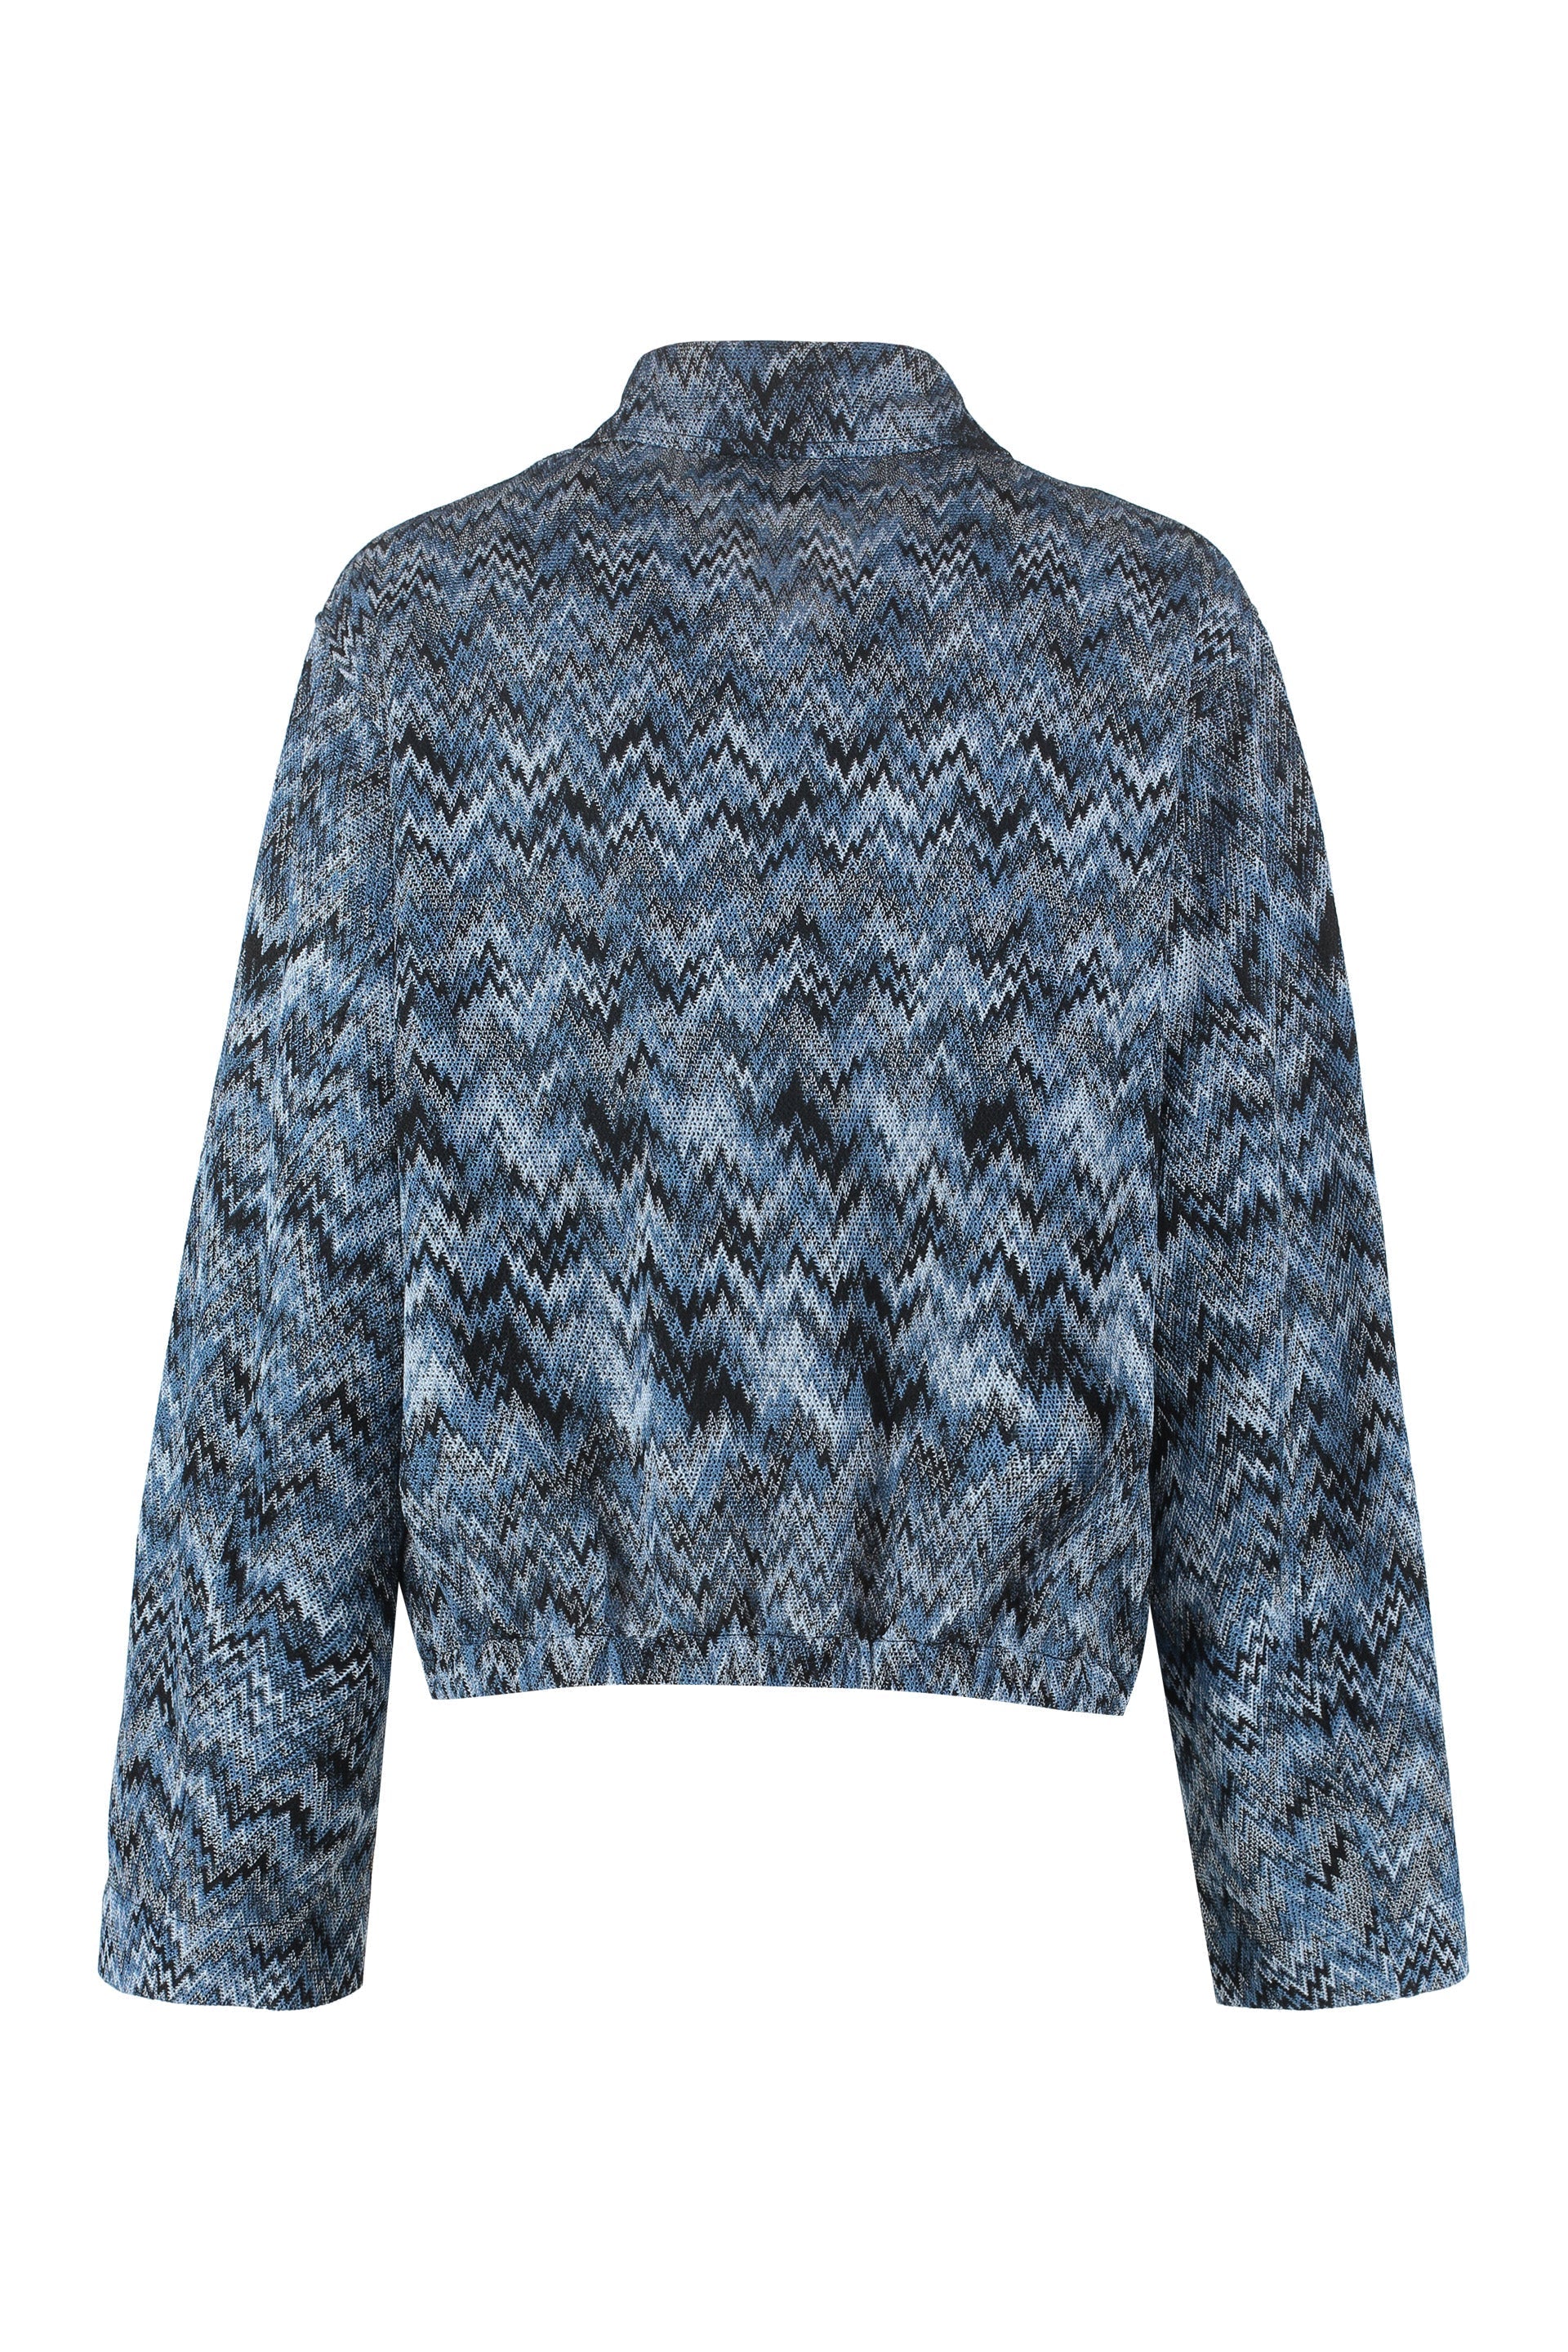 Chevron motif knitted jacket